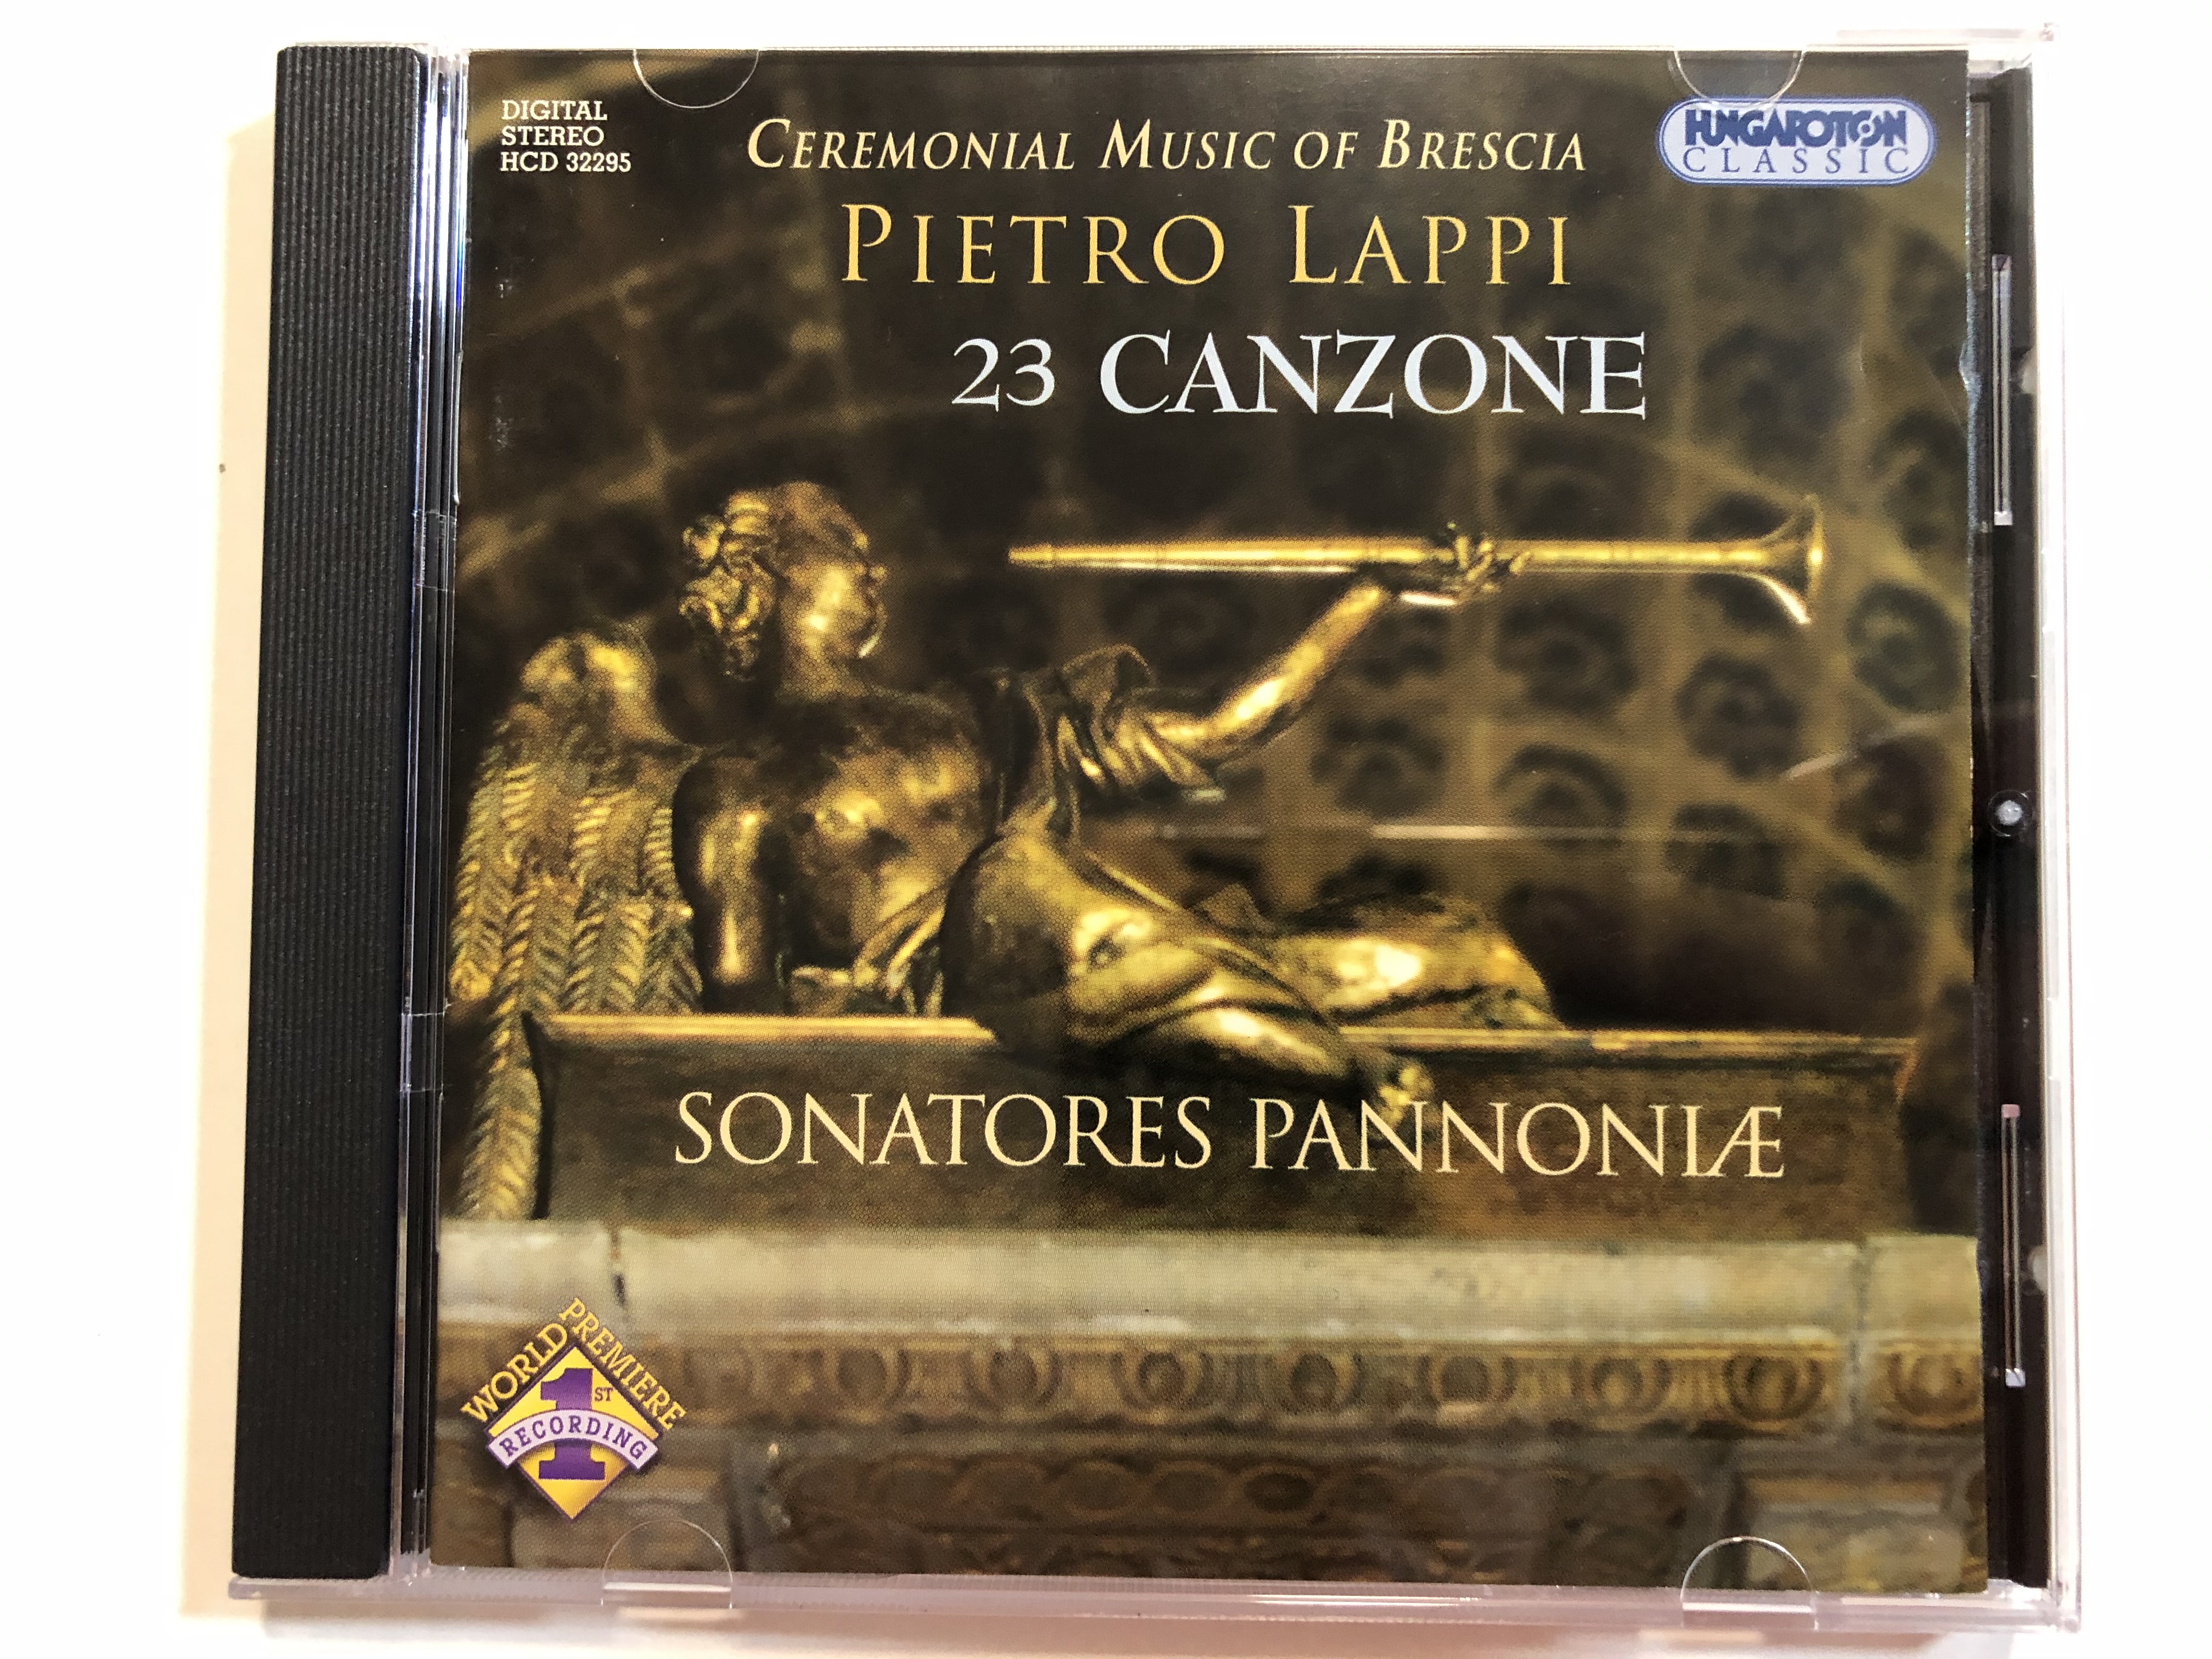 ceremonial-music-of-brescia-pietro-lappi-23-canzone-sonatores-pannonie-hungaroton-classic-audio-cd-2004-stereo-hcd-32295-1-.jpg